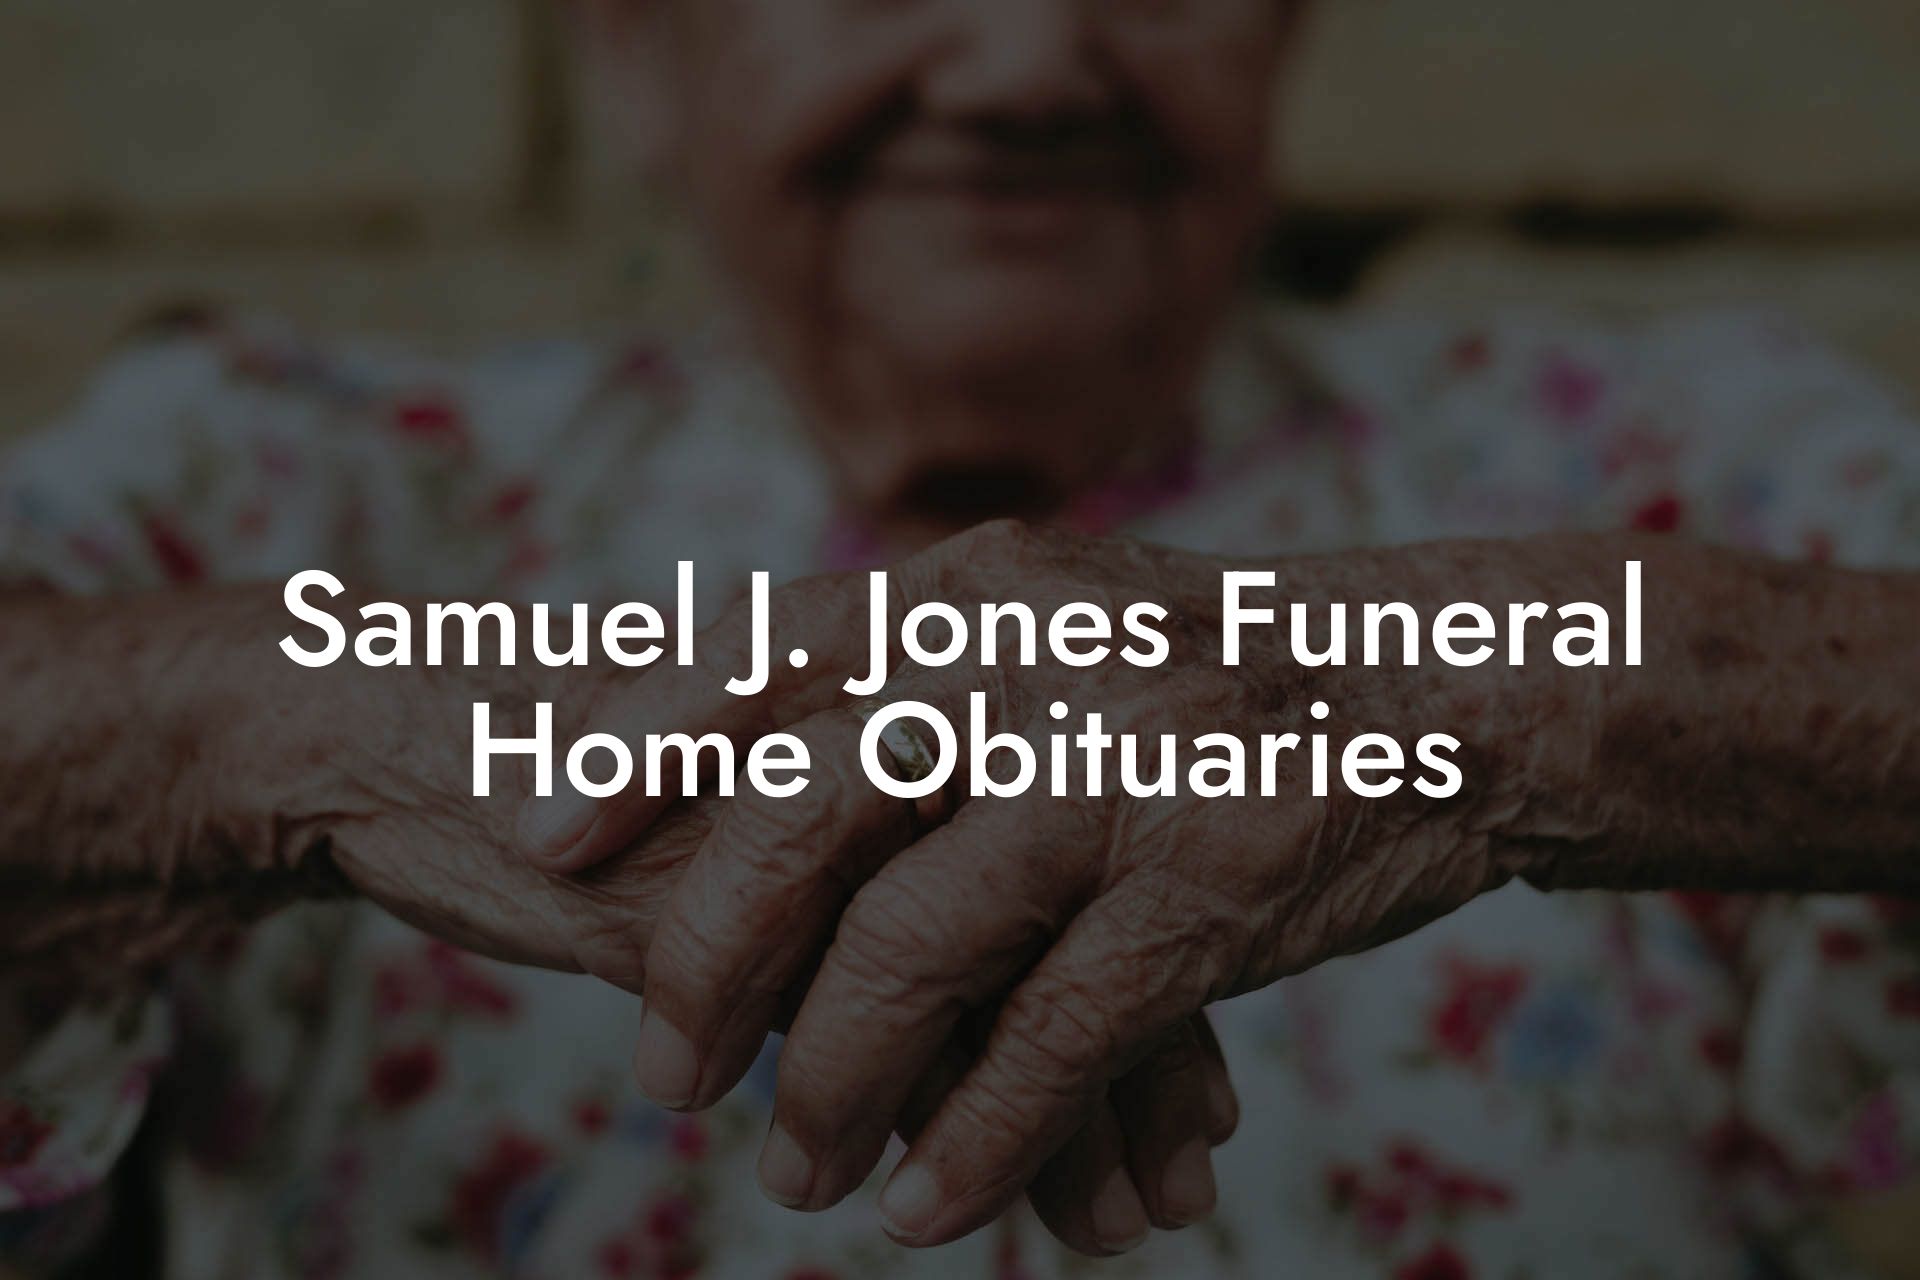 Samuel J. Jones Funeral Home Obituaries